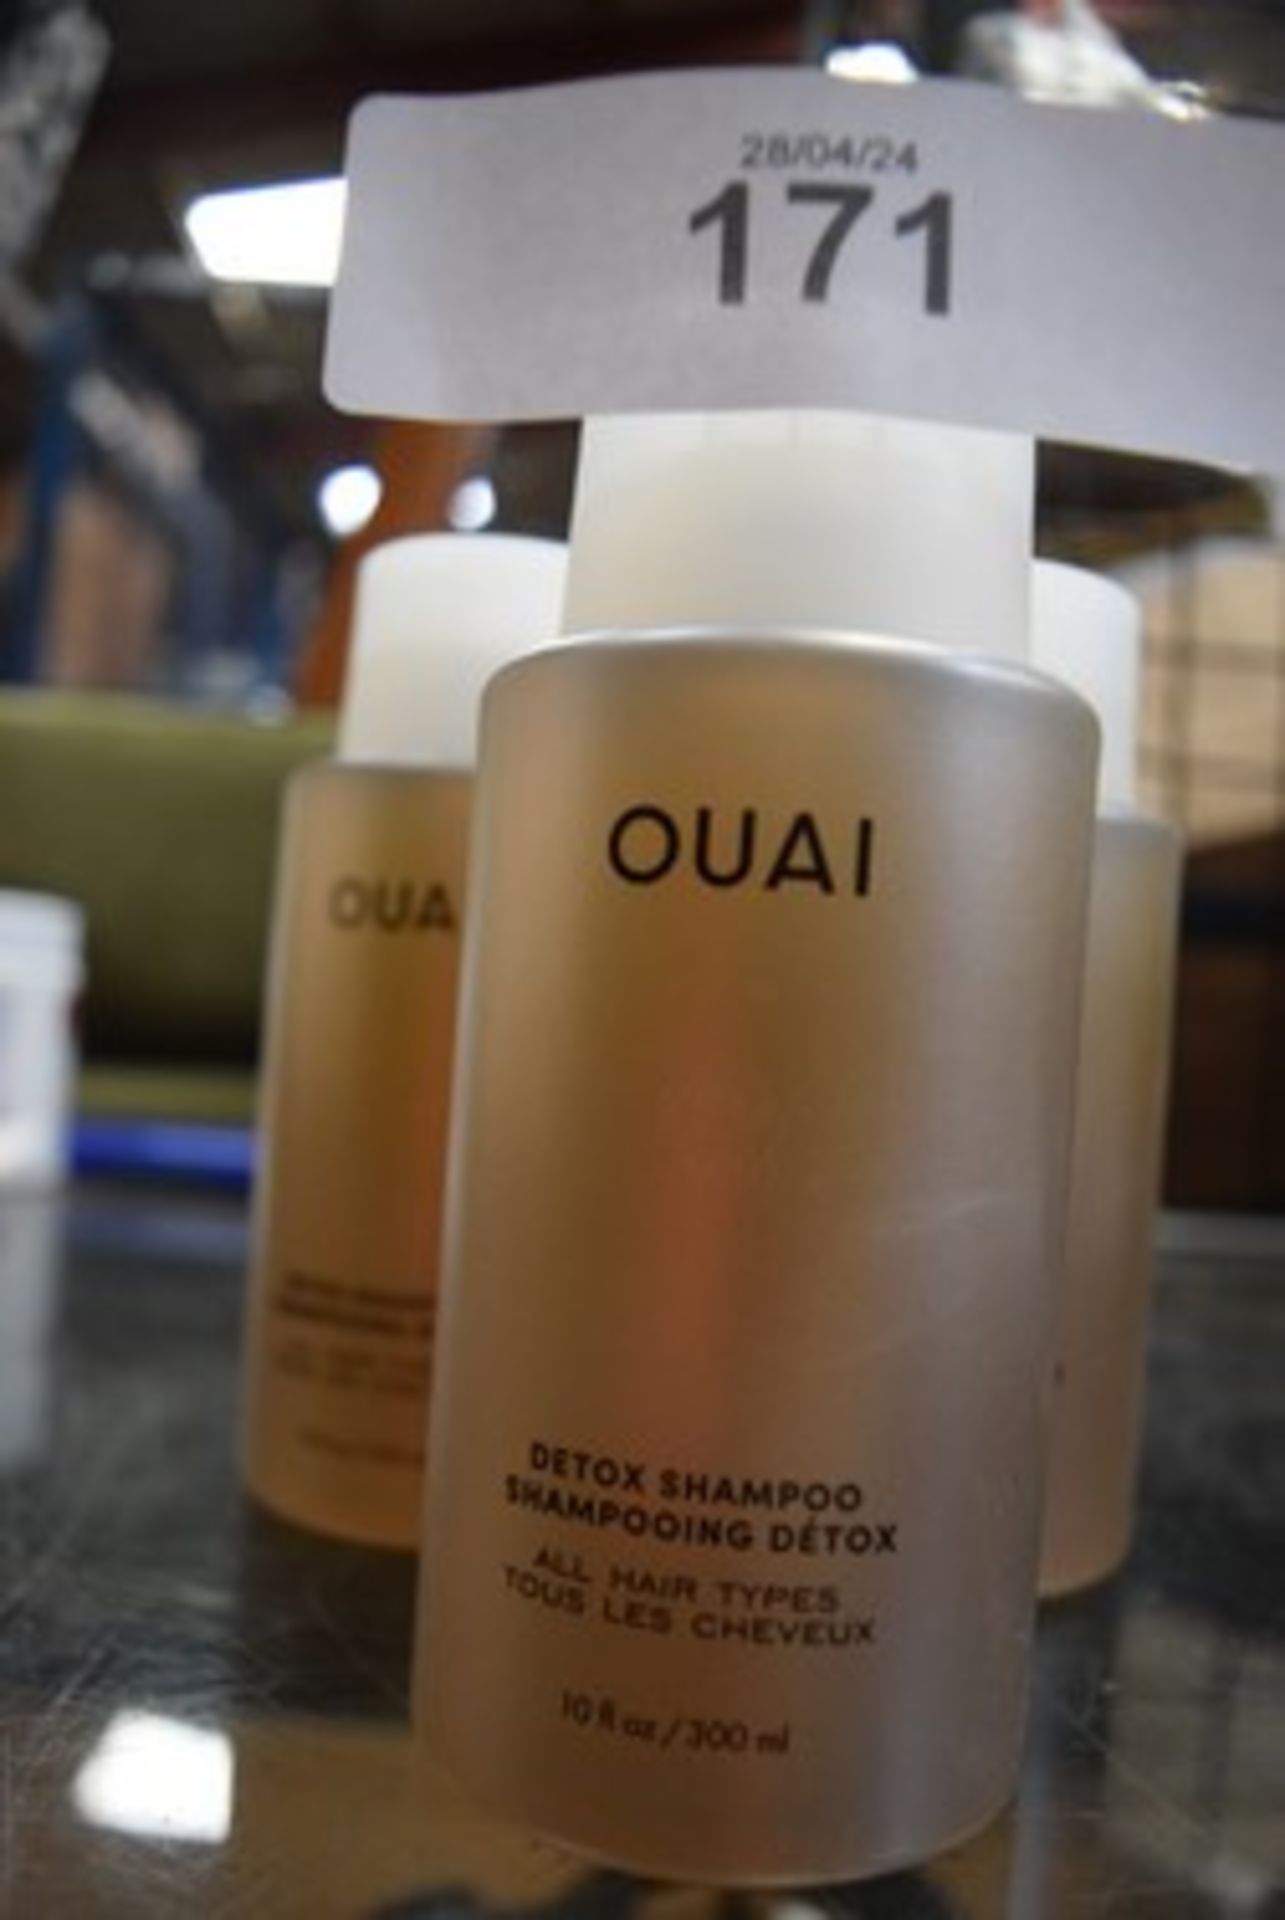 5 x 300ml bottles of Ouai detox shampoo - new (C6)